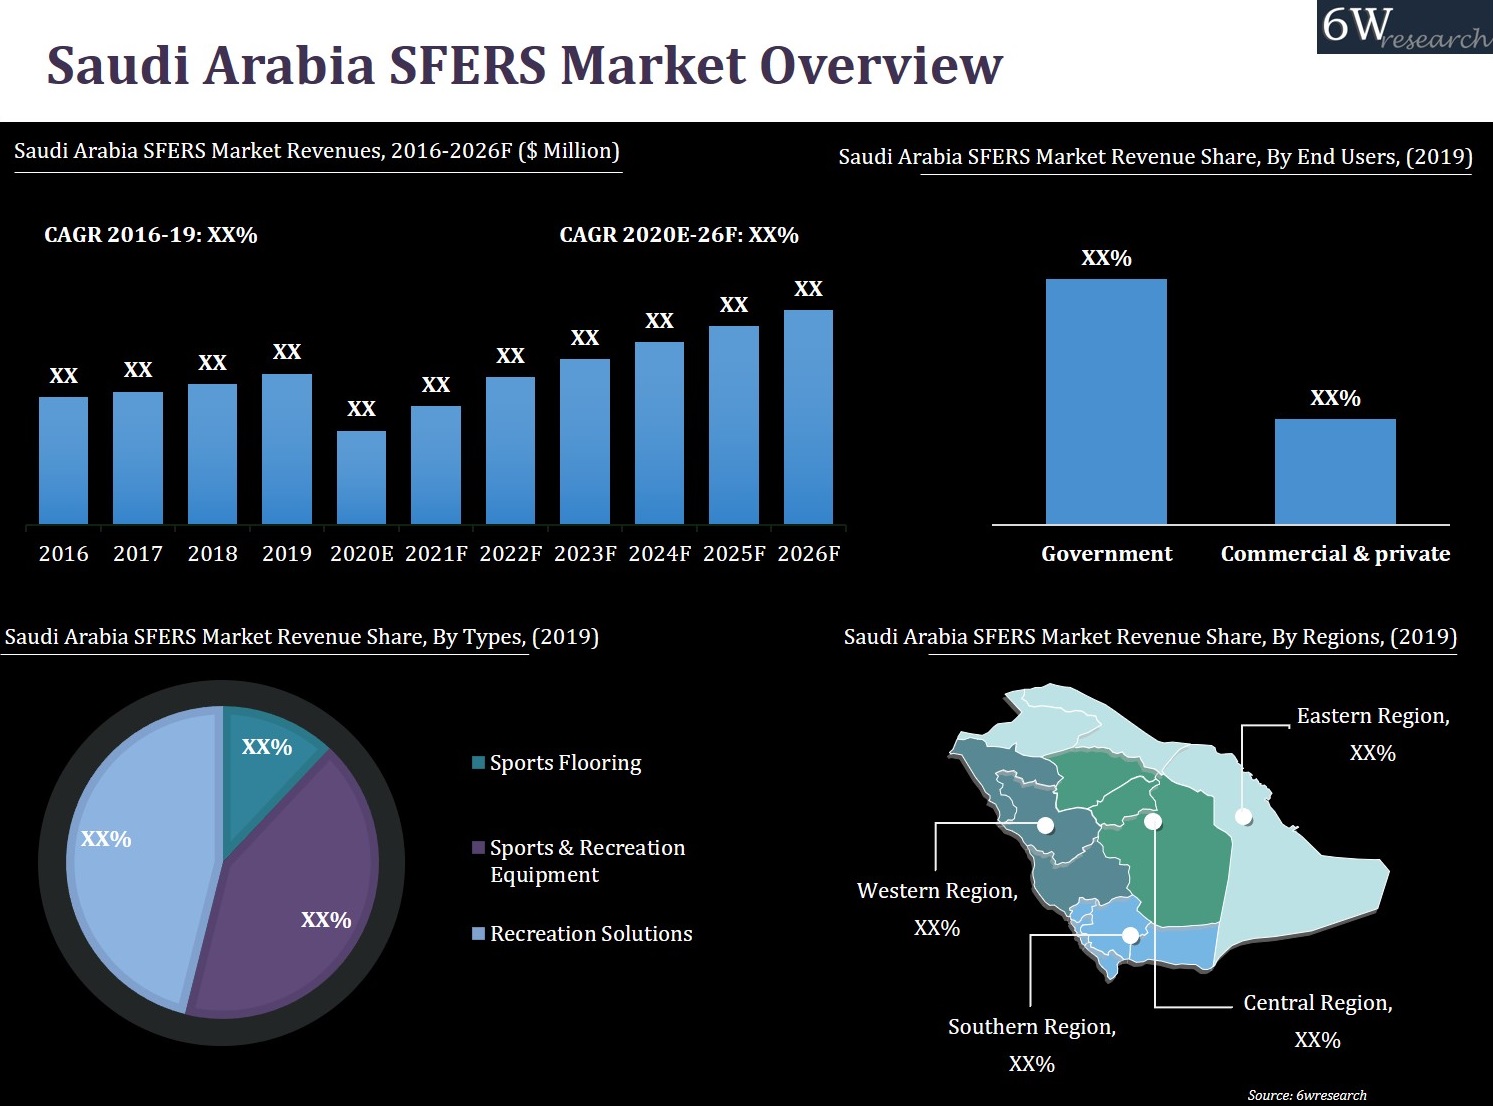 Saudi Arabia Sports & Fitness Equipment And Recreation Solutions Market